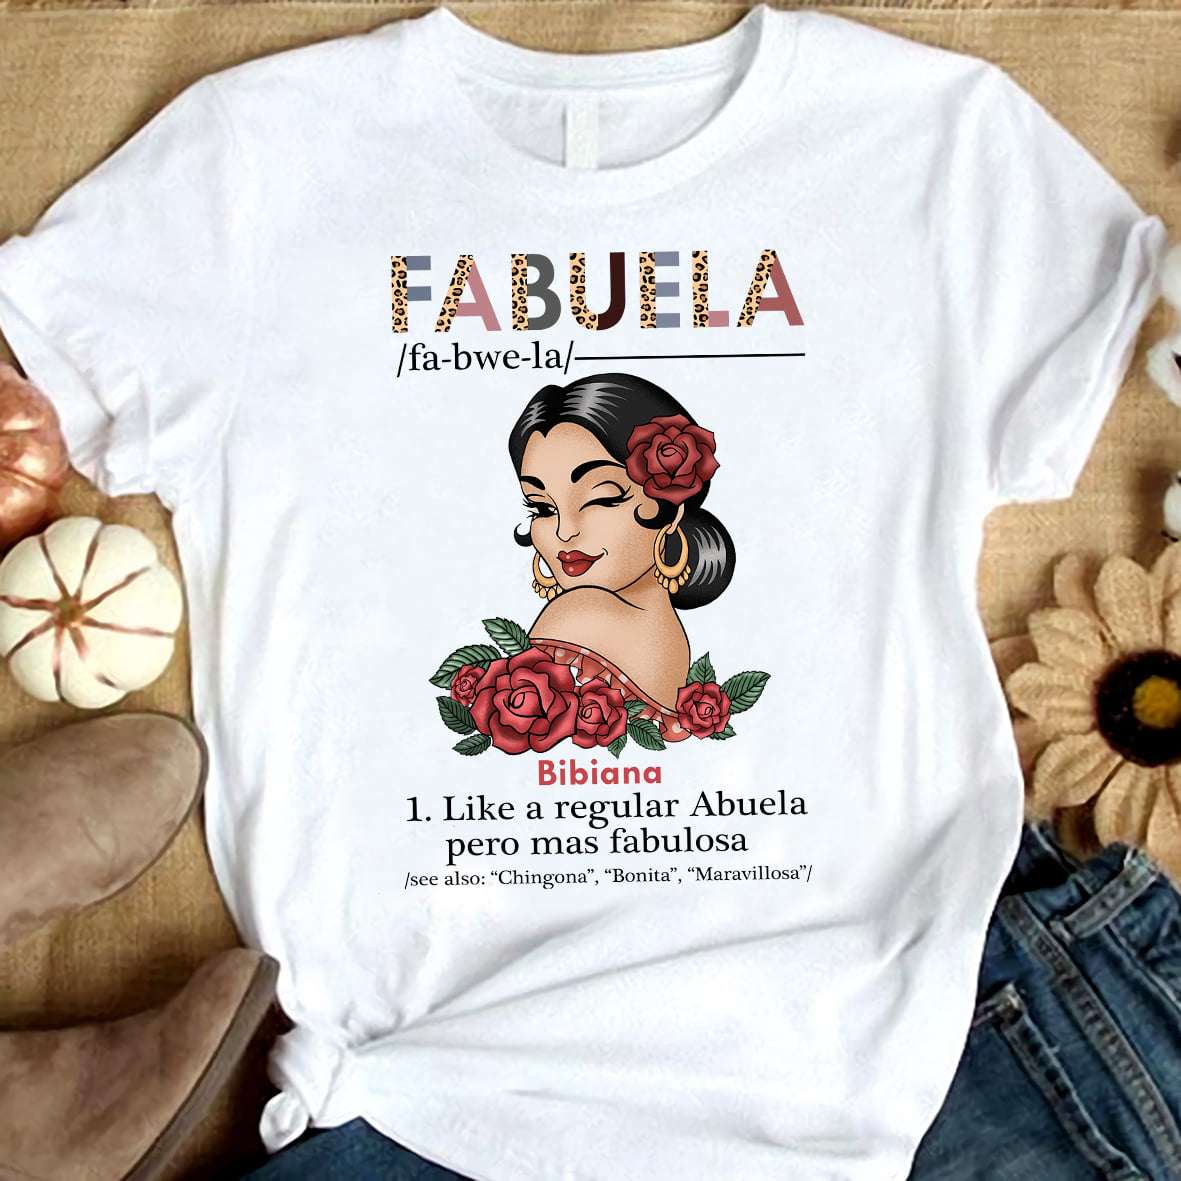 Fabuela bibiana like a regular Abuela - Mexican woman